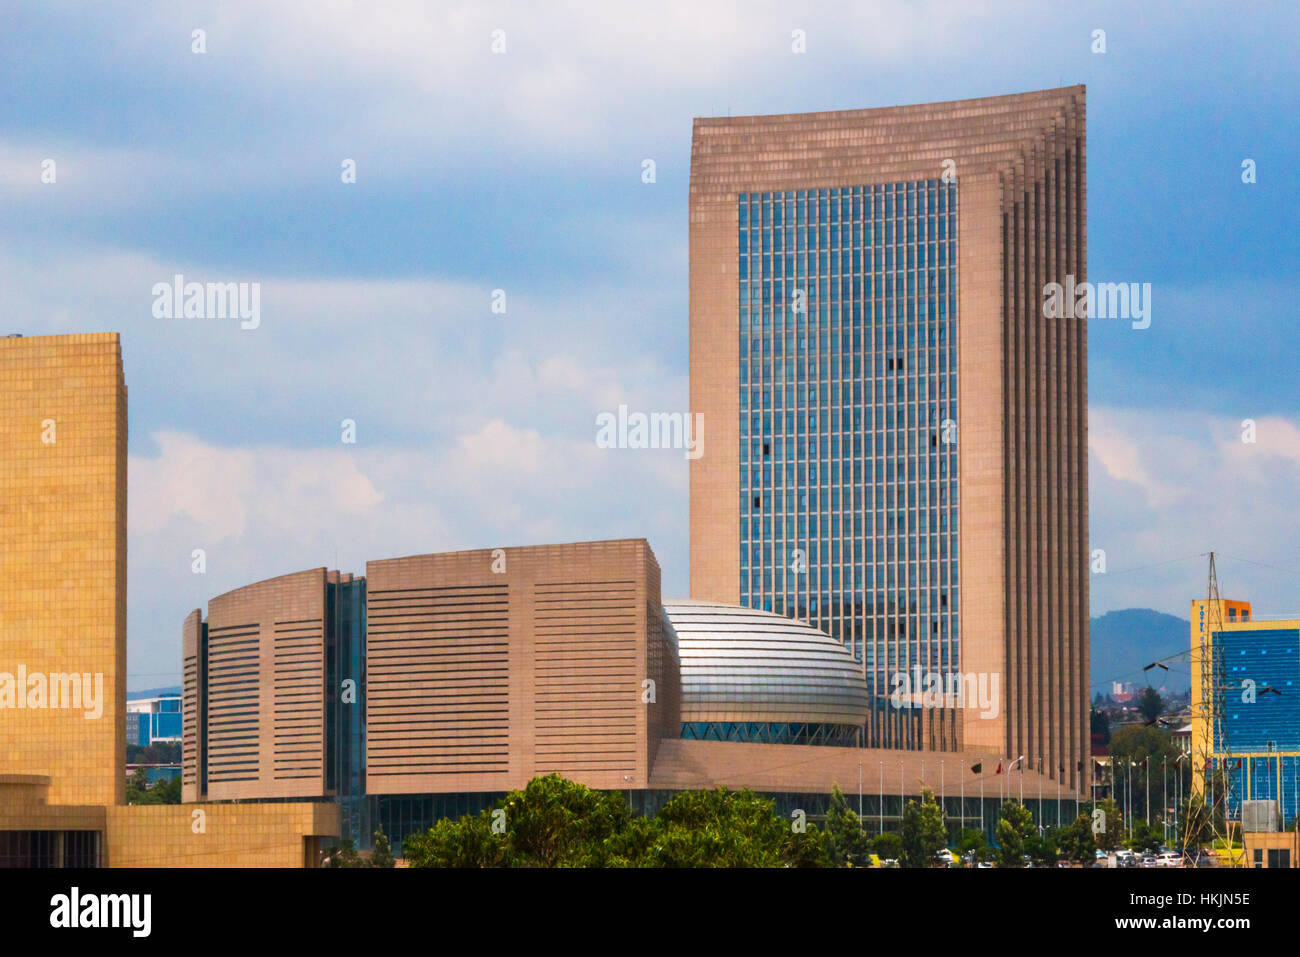 African Union Building, Addis Ababa, Ethiopia Stock Photo